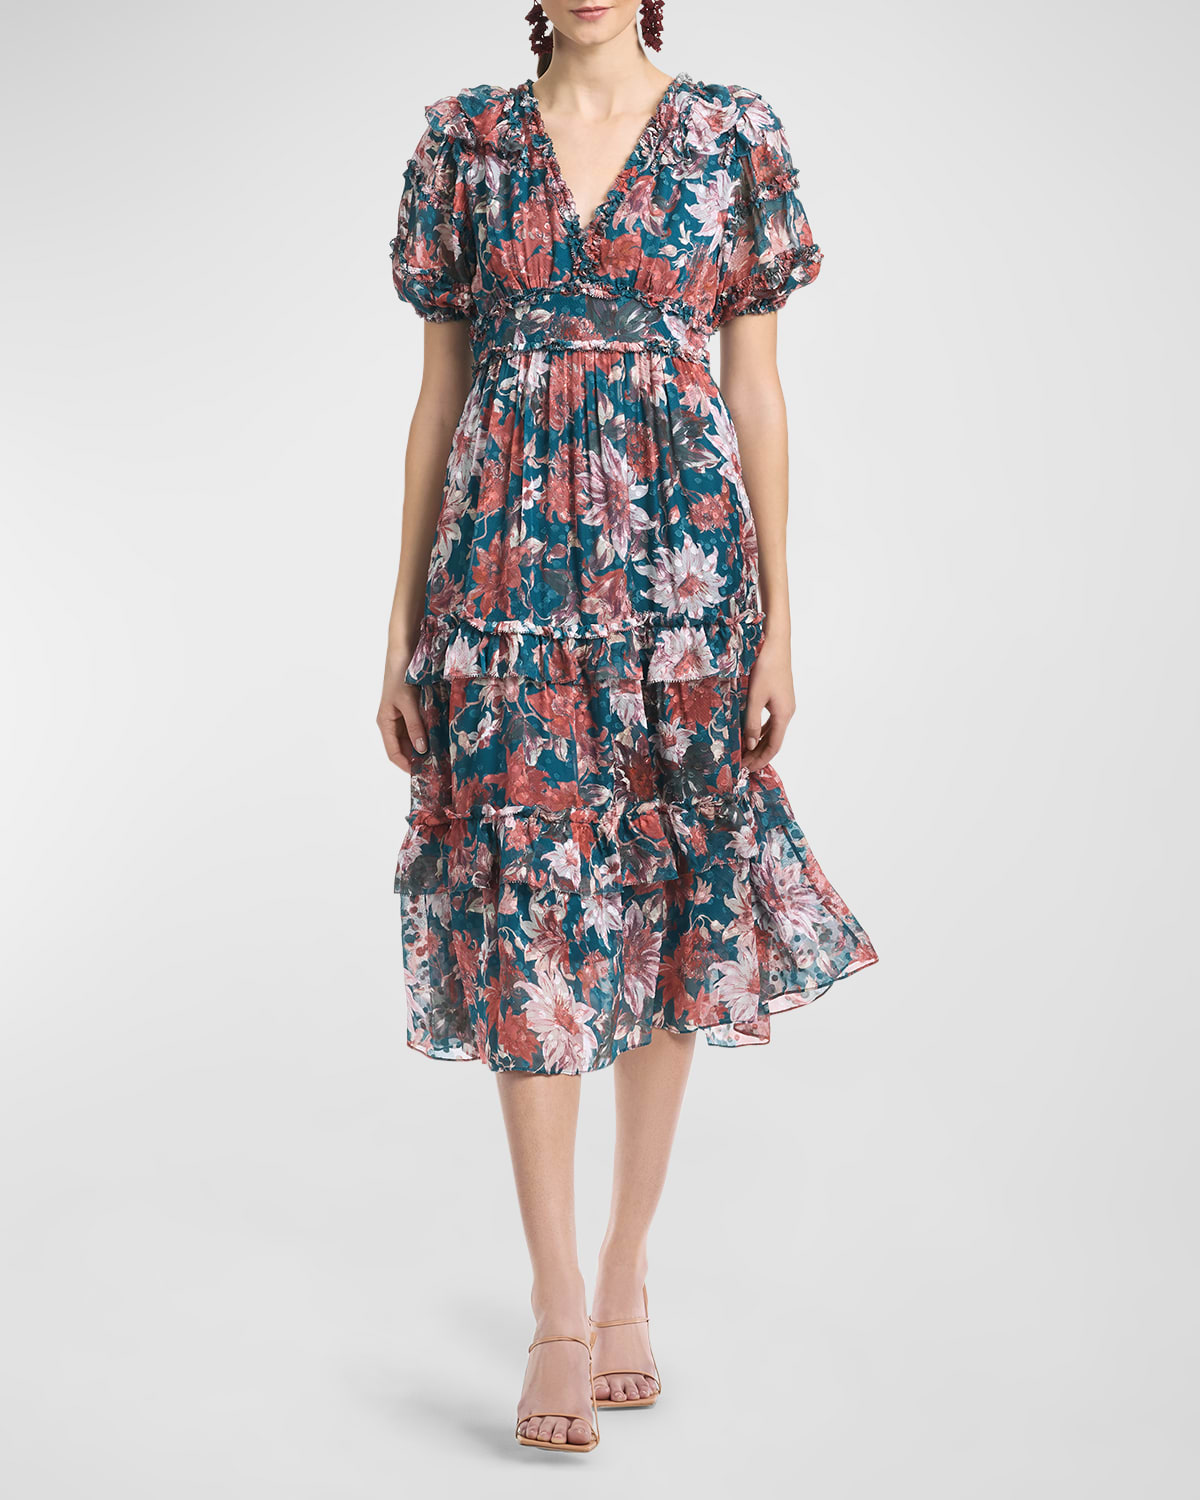 Sachin & Babi Dalia Floral-Print Tiered Dress | Neiman Marcus